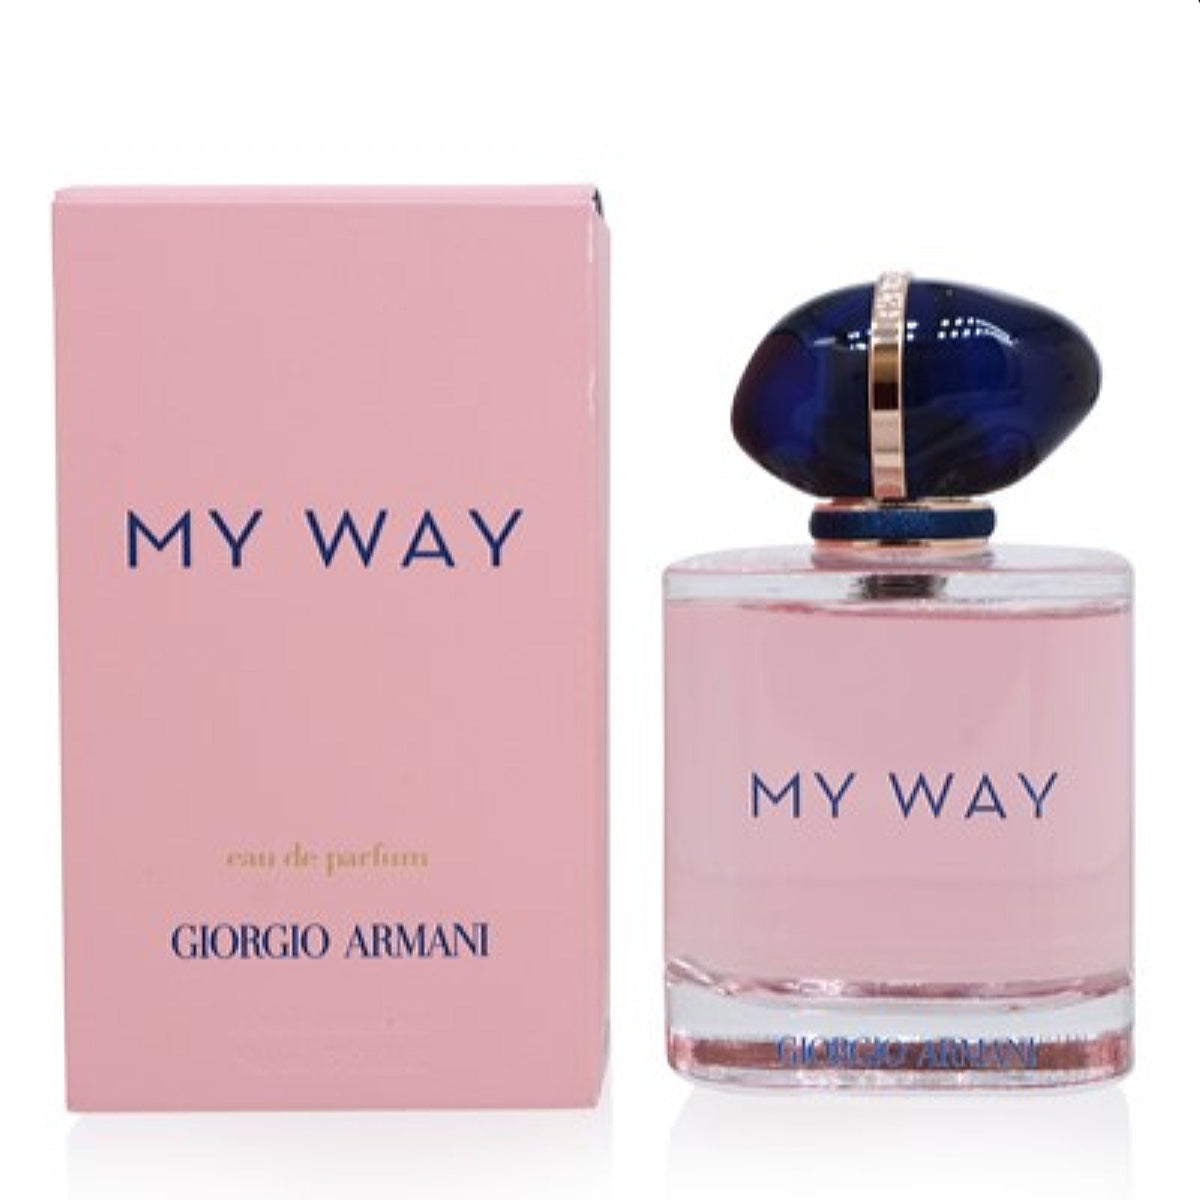 My Way Giorgio Armani Edp Spray 3.0 Oz (90 Ml) For Women  1817041